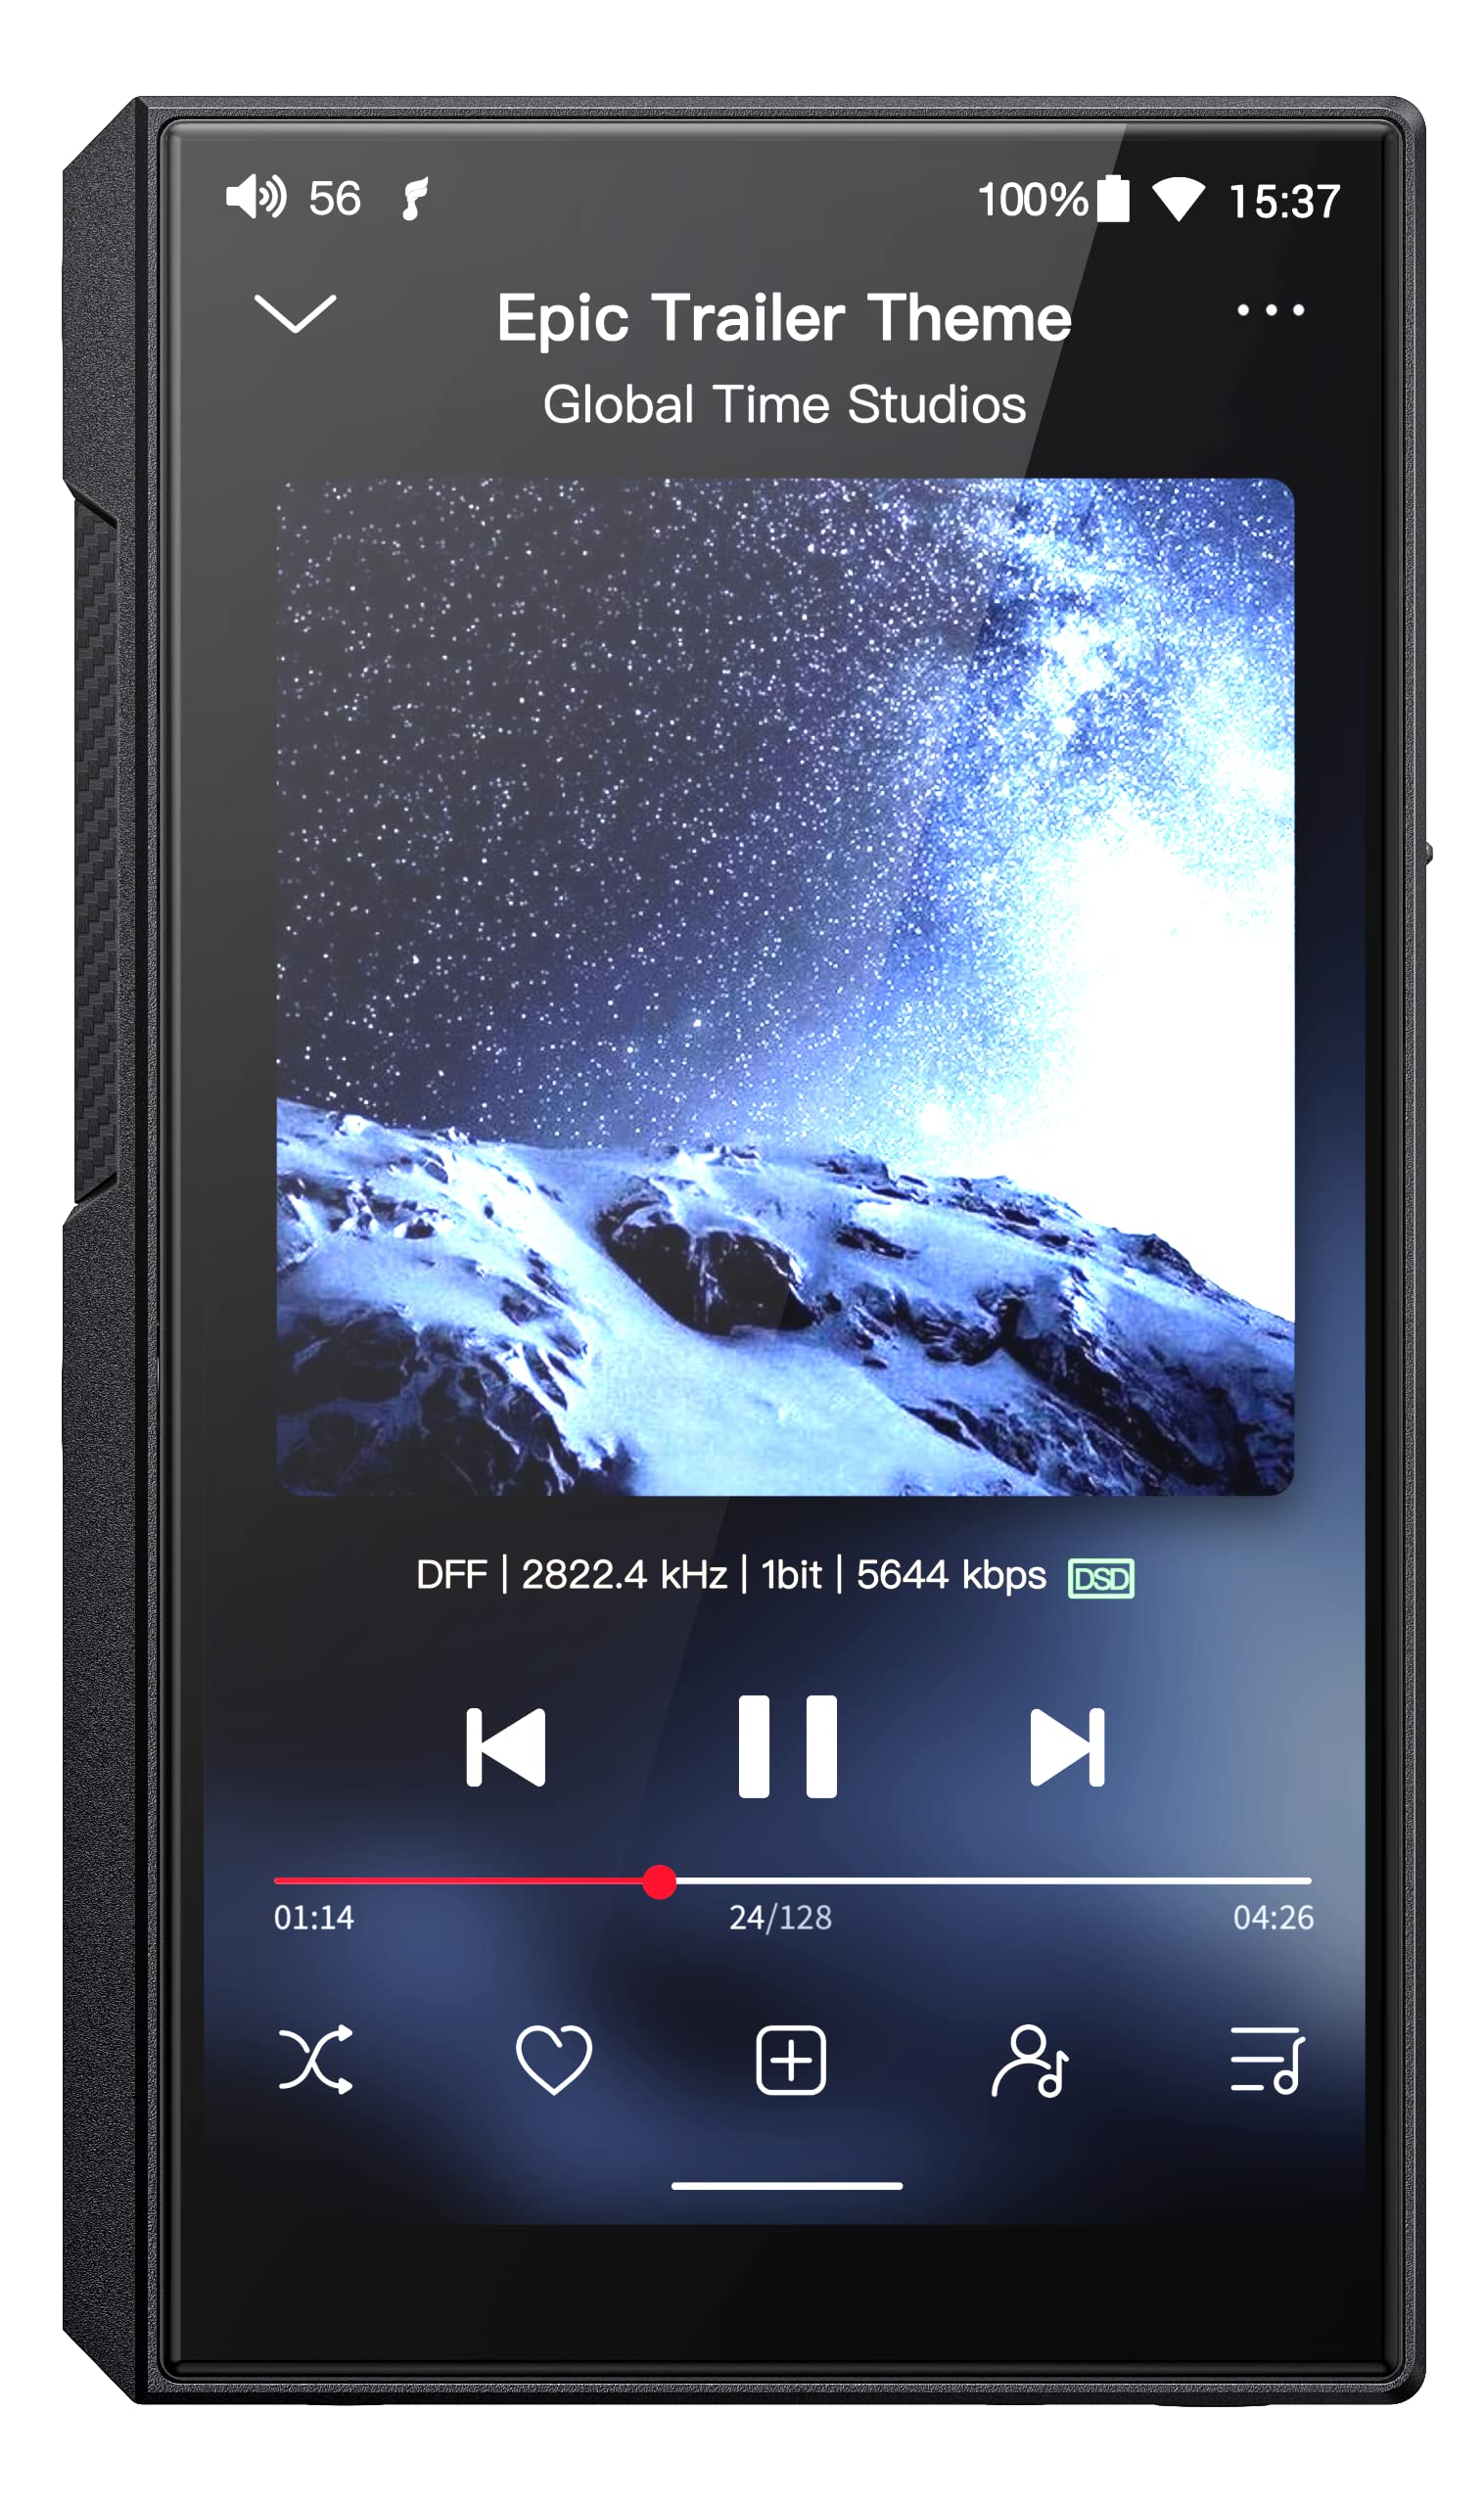  FiiO M11S ハイレゾ MP3 音楽プレーヤー、デュアル ES9038Q2M、Android 10 Snapdragon 660、5.0 インチ、ロスレス DSD/MQA、Apple Music/Tidal/Amazon Music 4.4mm 2.5mm/3.5mm/4.4mm...